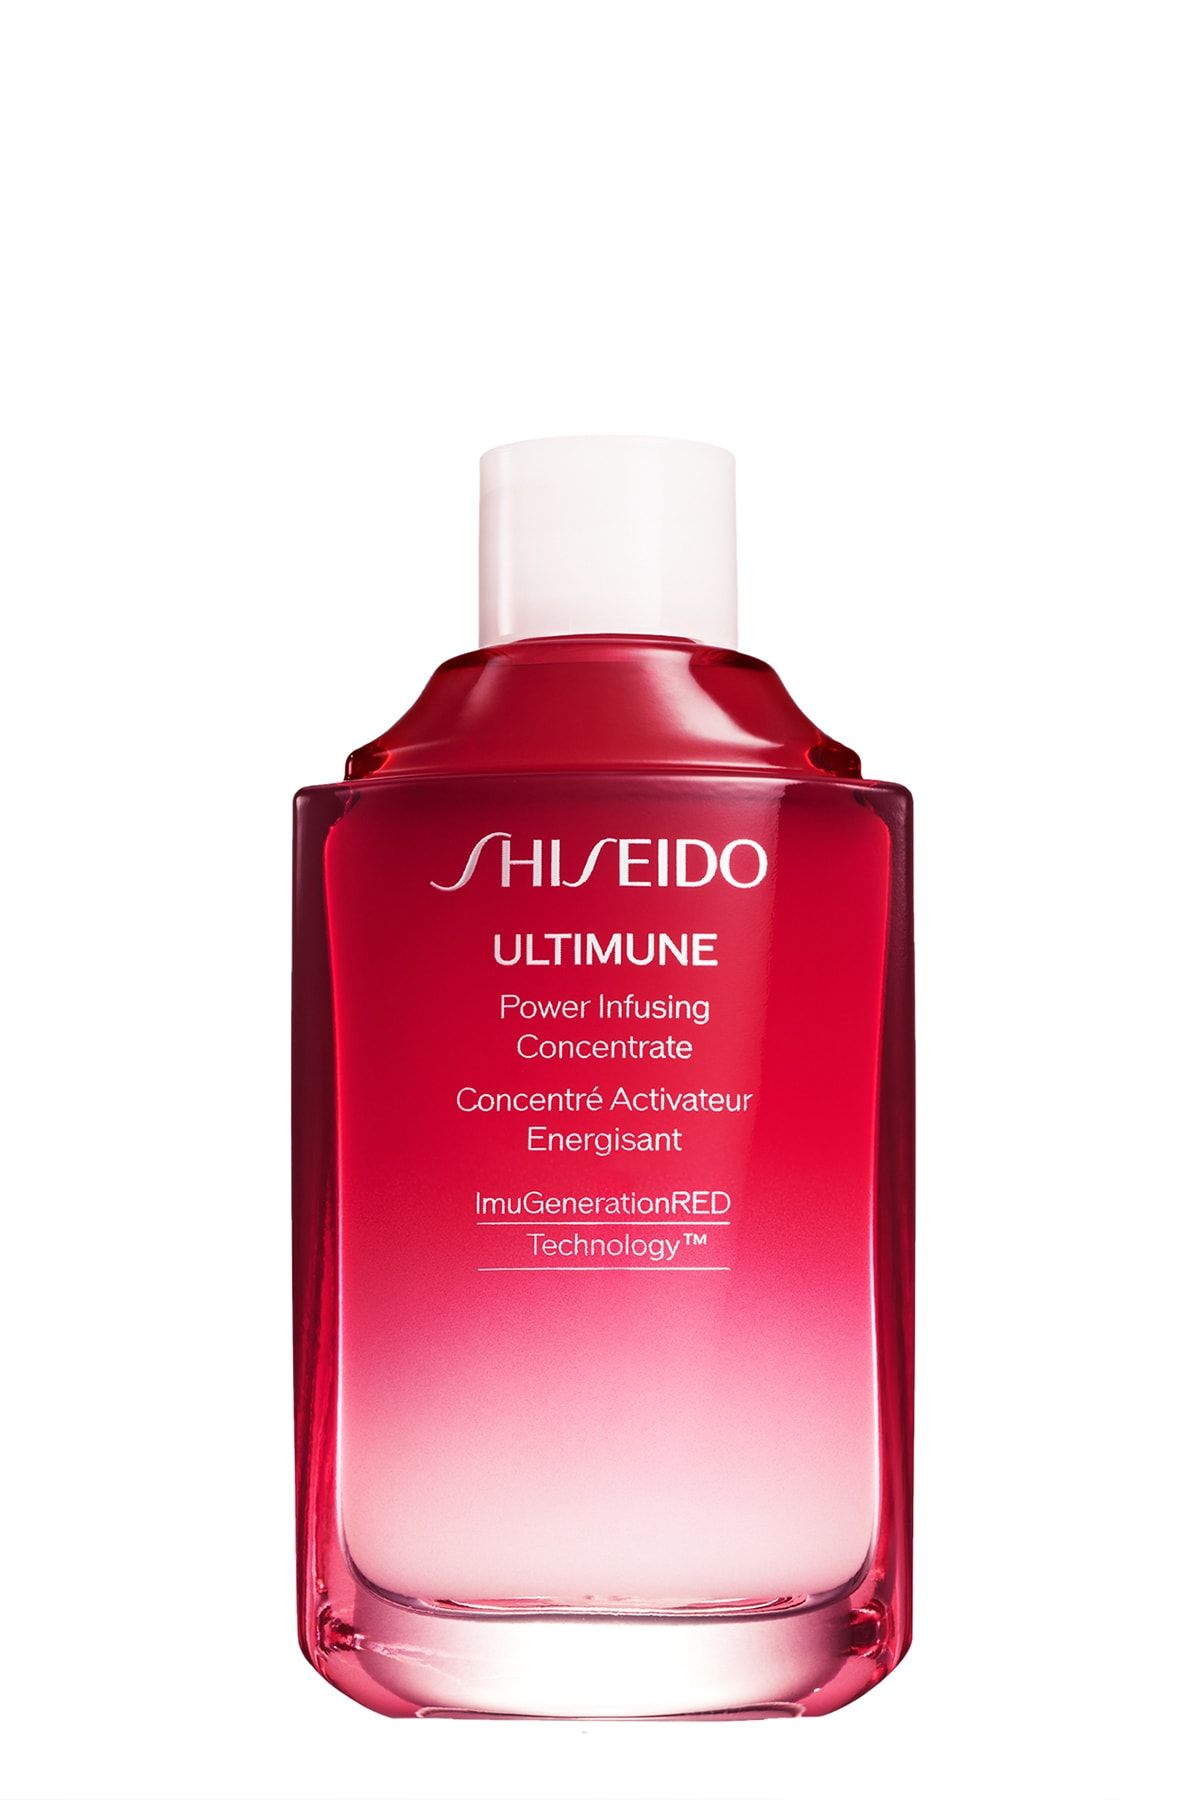 Shiseido Ultimune концентрат. Ultimune концентрат шисейдо Power infusing. Shiseido Ultimune Power infusing Concentrate 3.0 Refill. Shiseido Ultimune концентрат хранение.